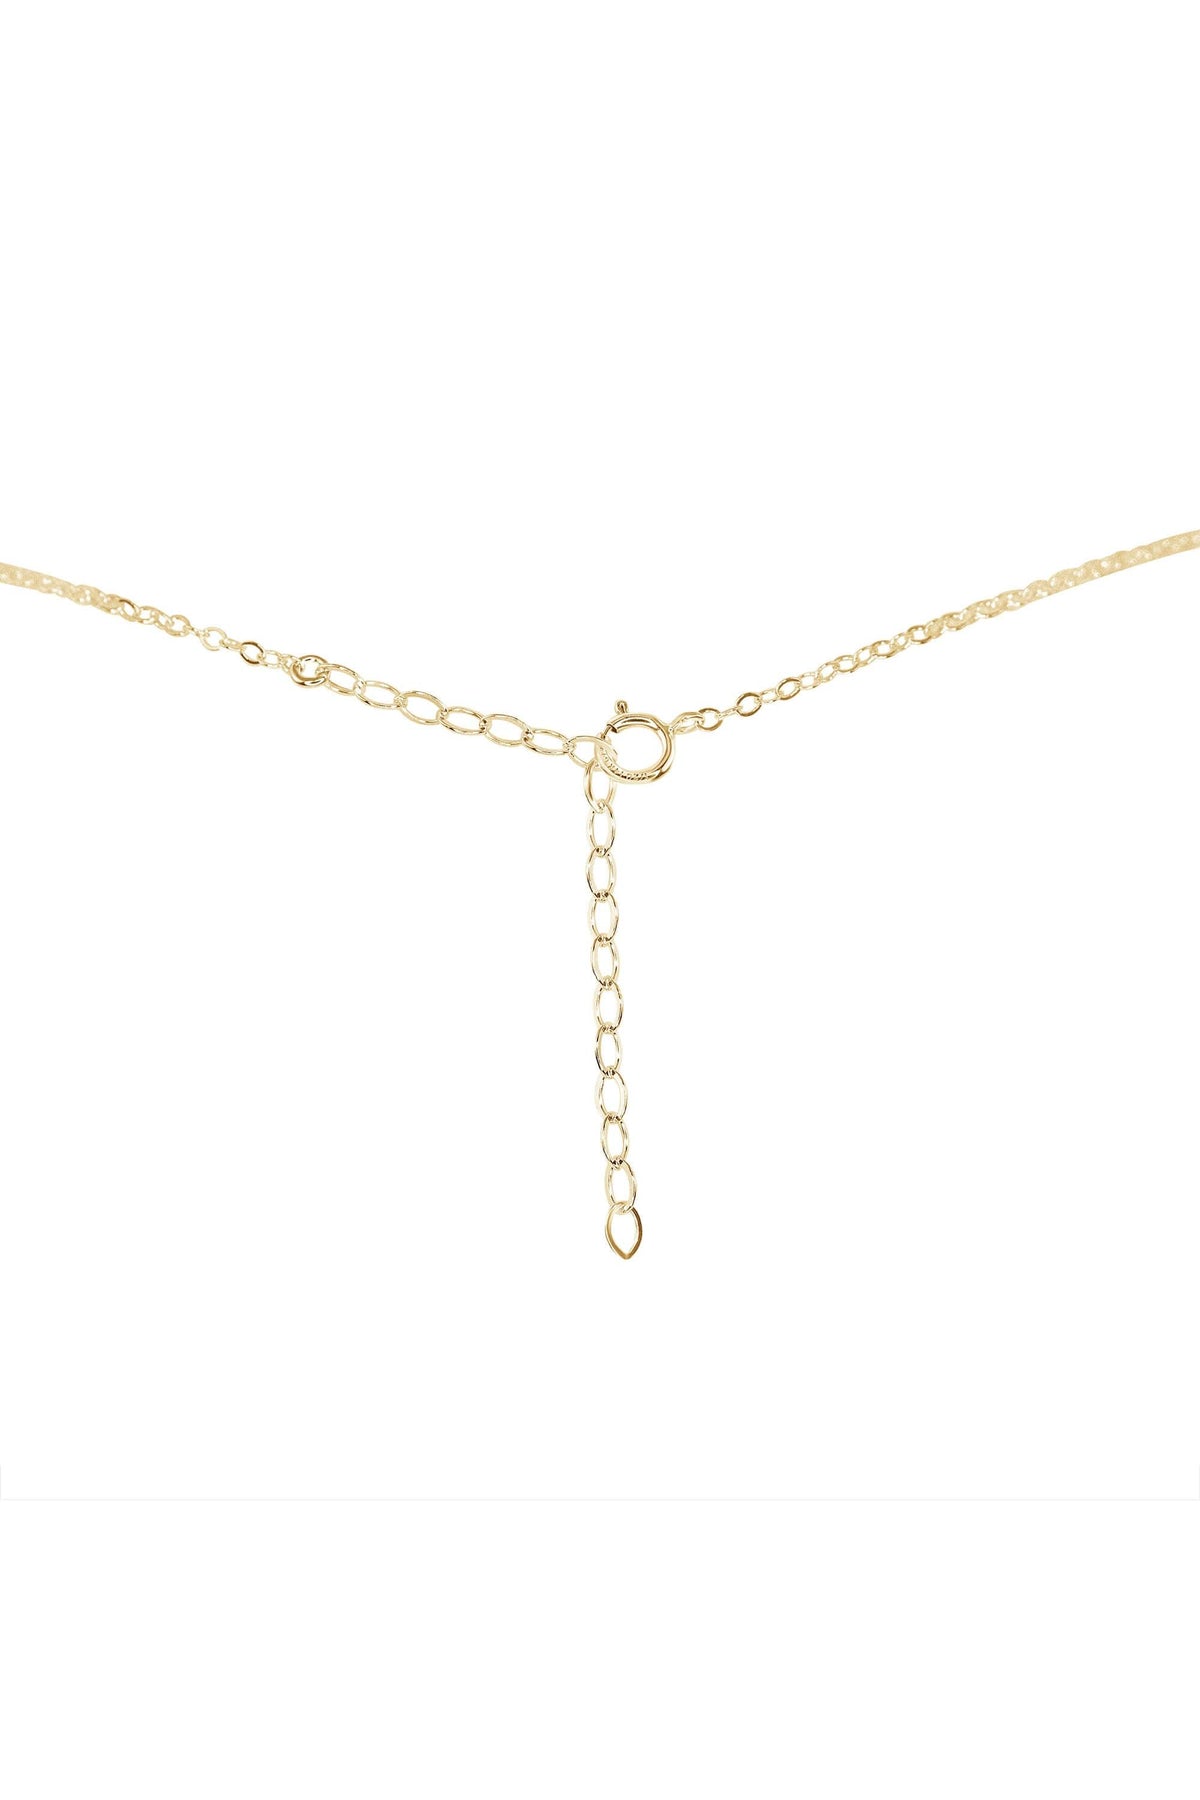 Raw Crystal Pendant Choker - Peridot - 14K Gold Fill - Luna Tide Handmade Jewellery